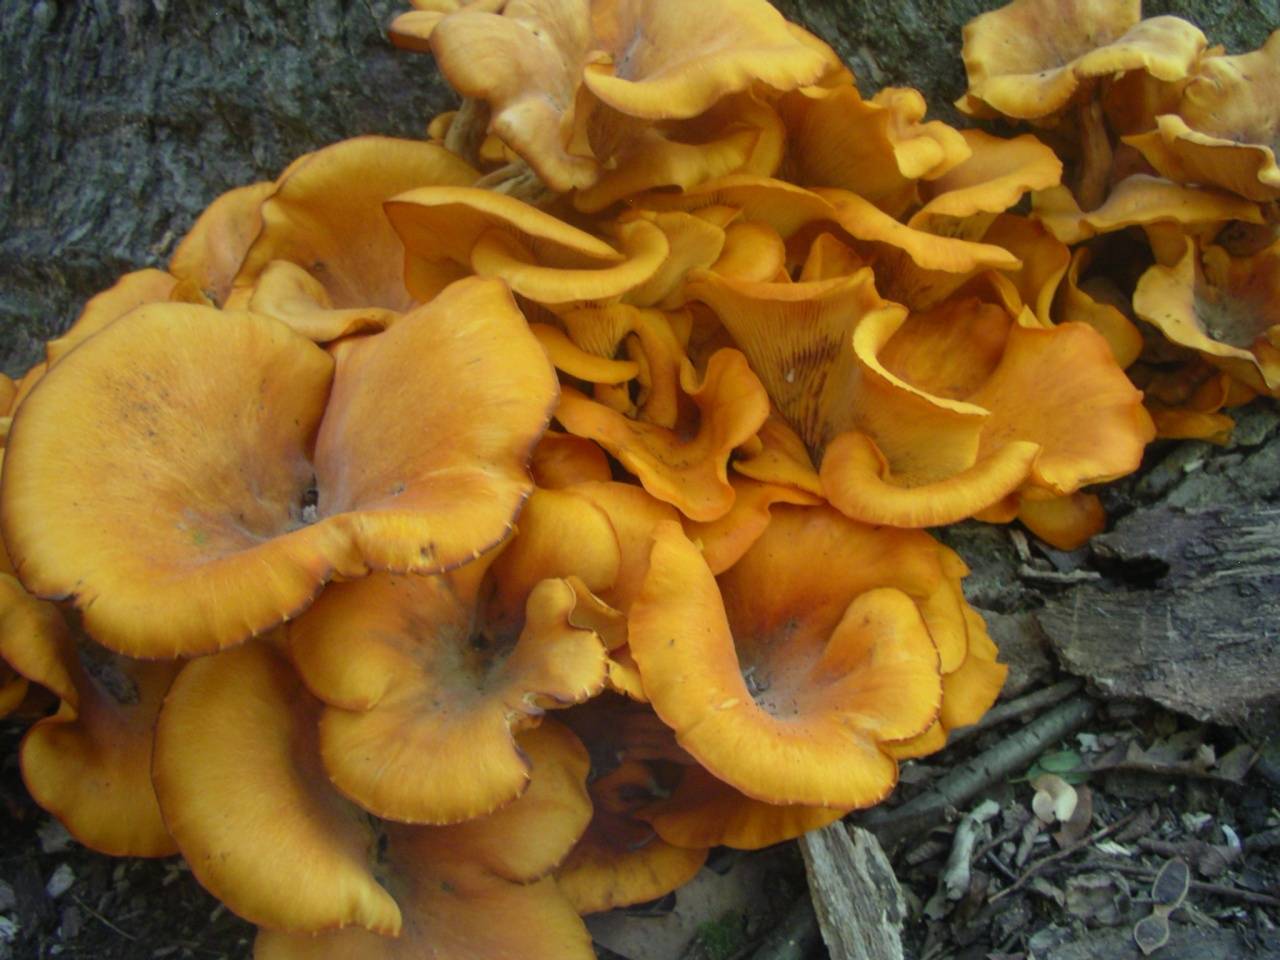 Омфалотус масличный – гриб со светящимися пластинками — викигриб